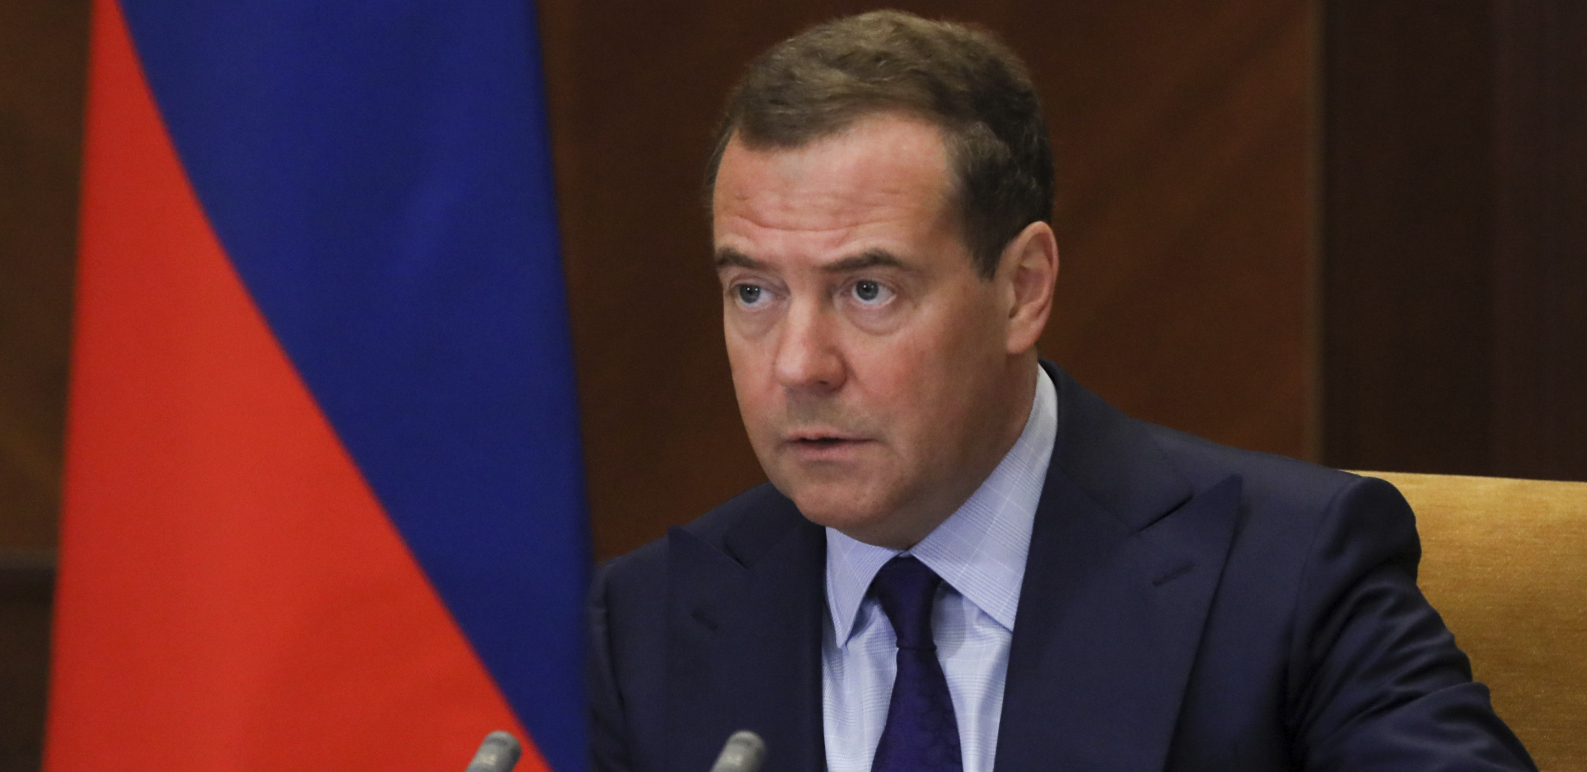 "AMERIKA ĆE DOŽIVETI NOVI 11. SEPTEMBAR" Medvedev preti nuklearnim ili biološkim oružjem